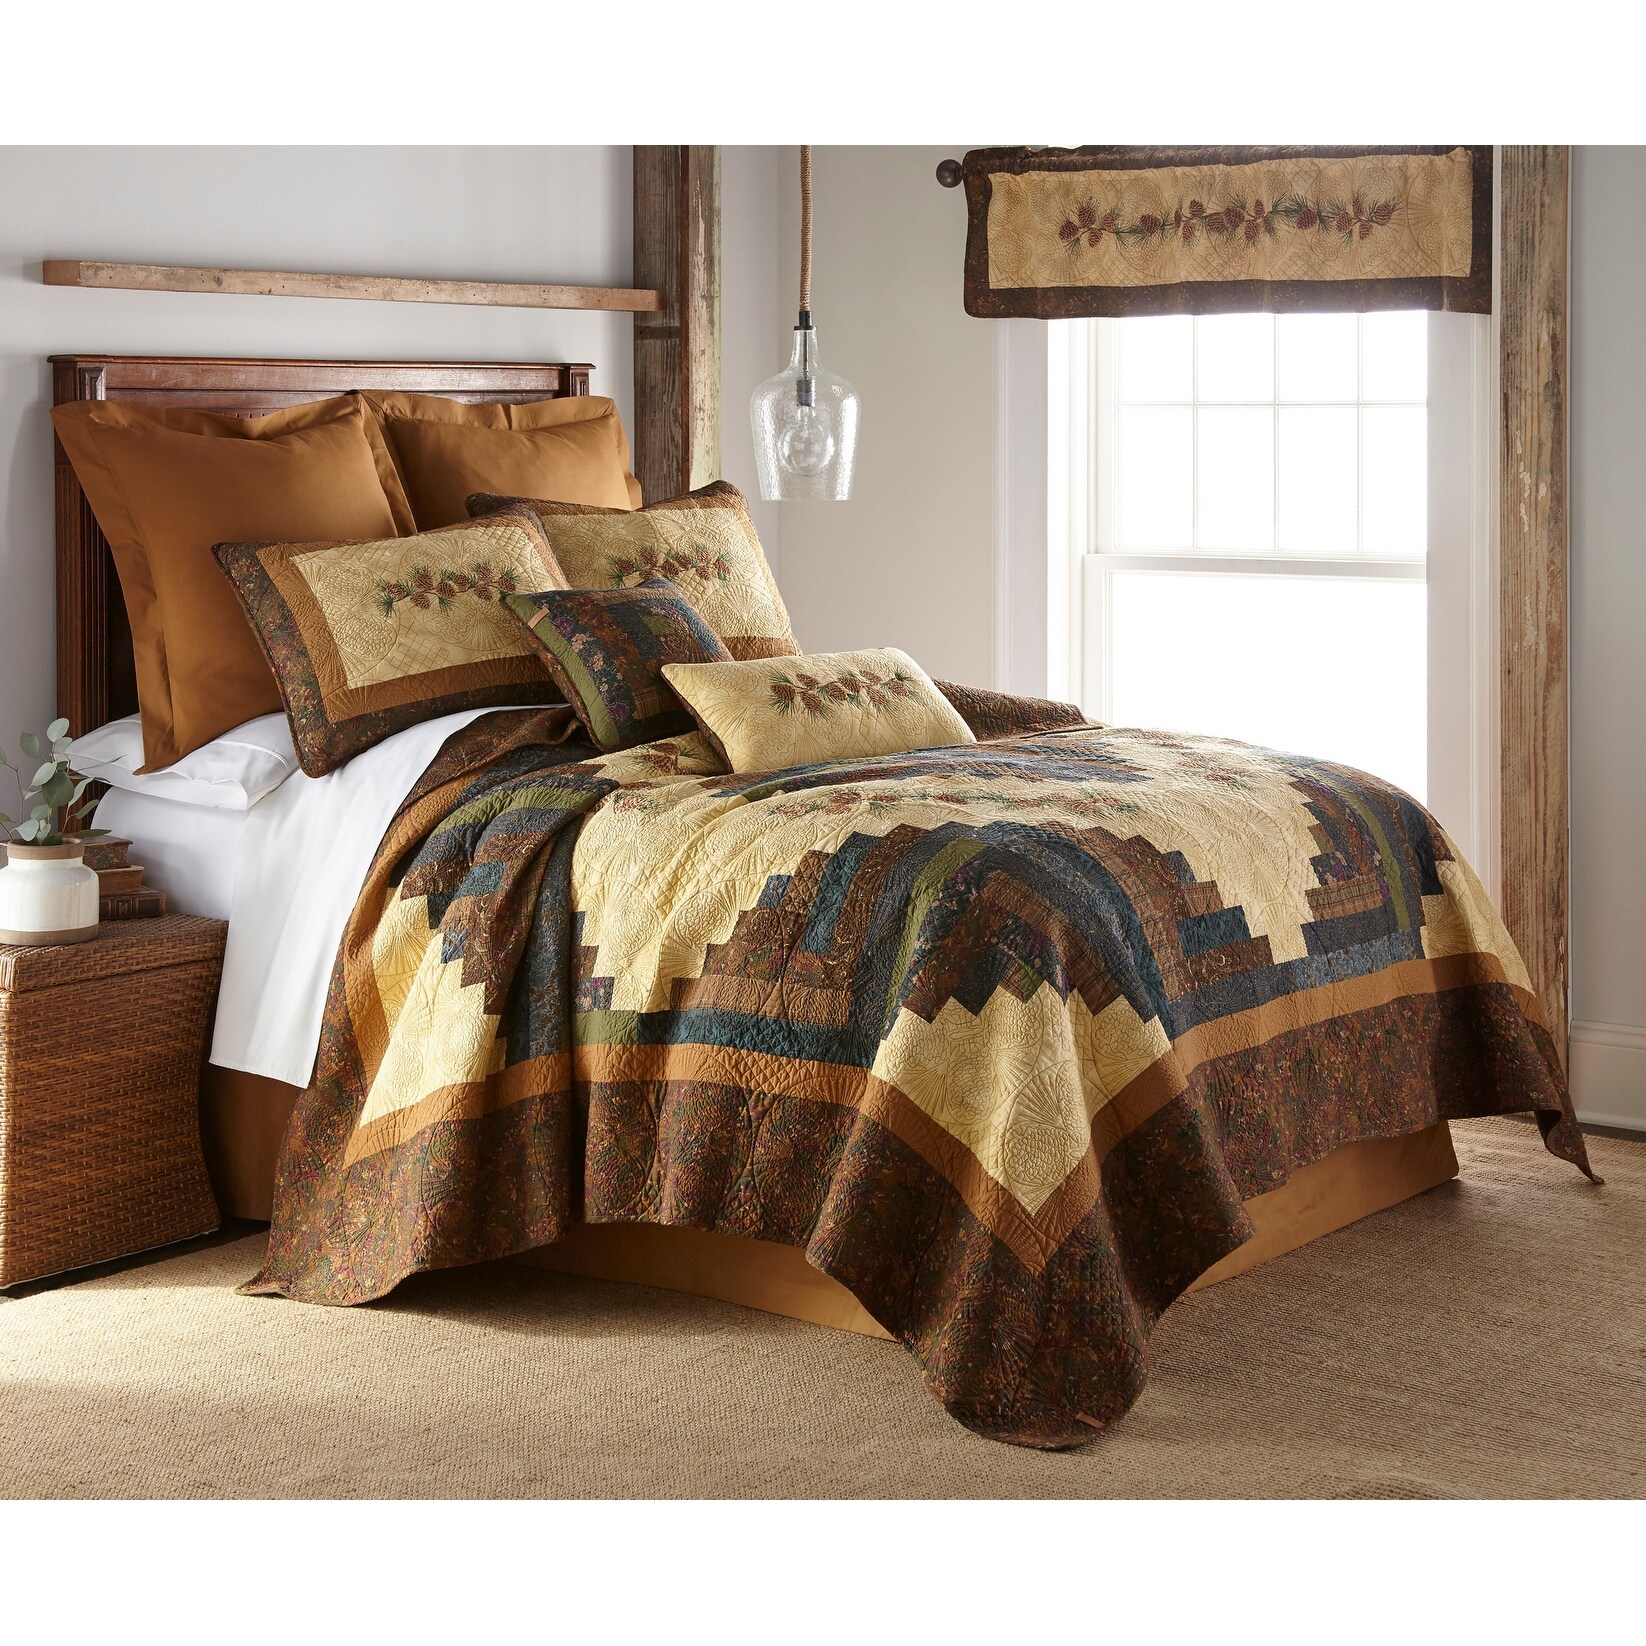 Donna Sharp's Cabin Raising Pinecone Quilt Set - Overstock - 31525440